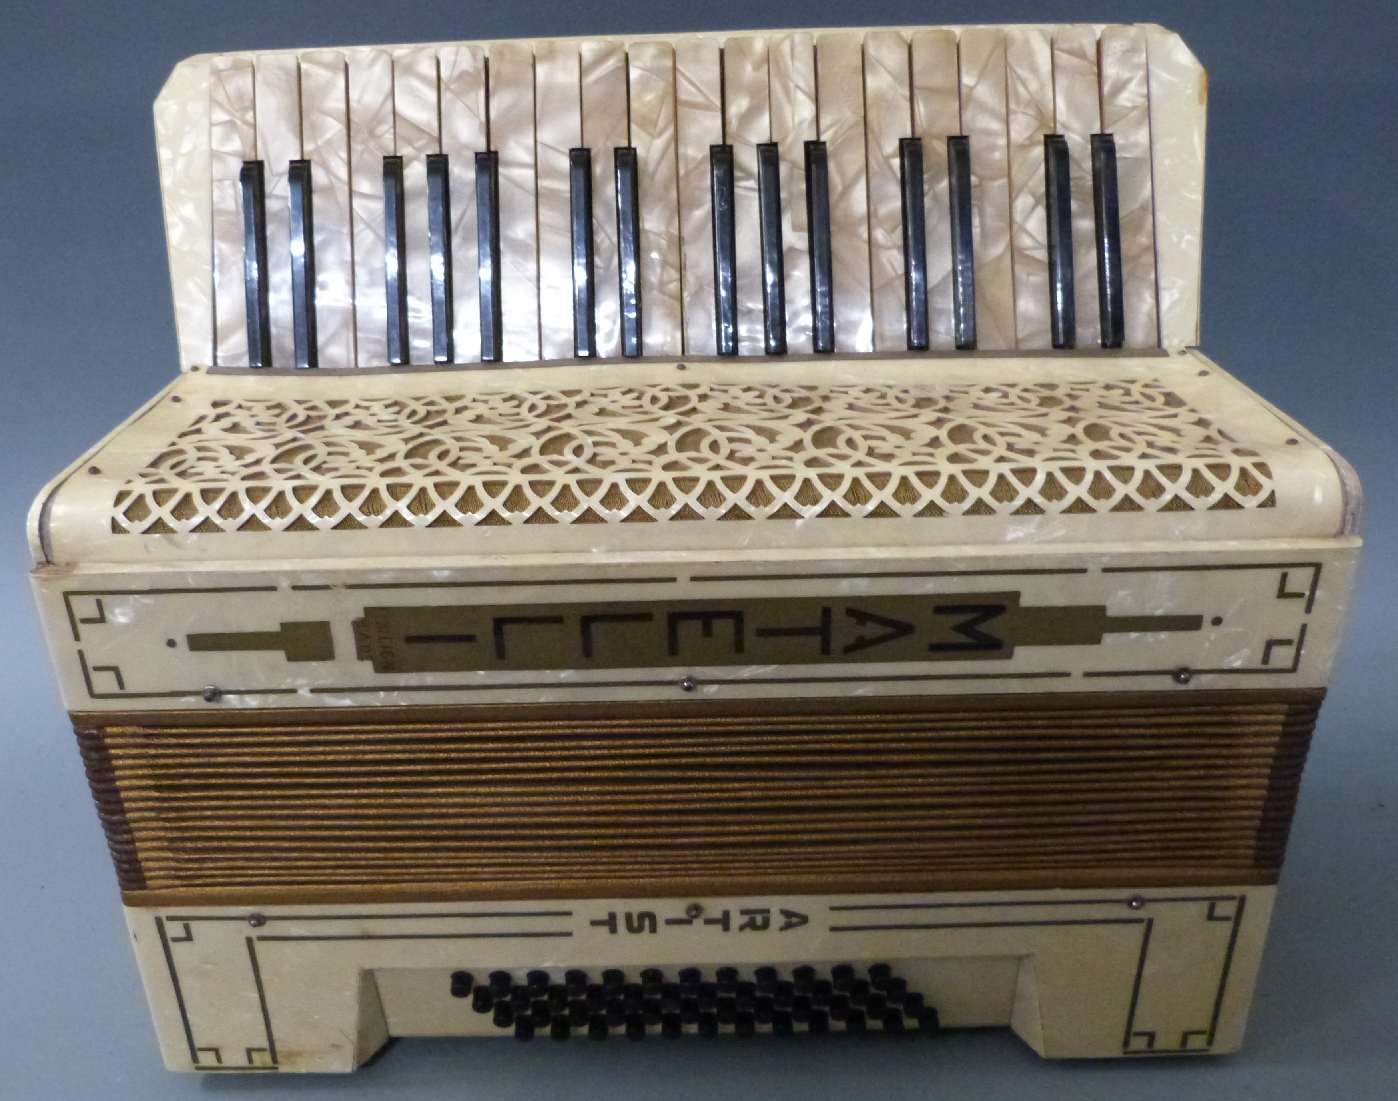 Mattelli 48 bass piano accordion in ivory pearloid finish, in original case